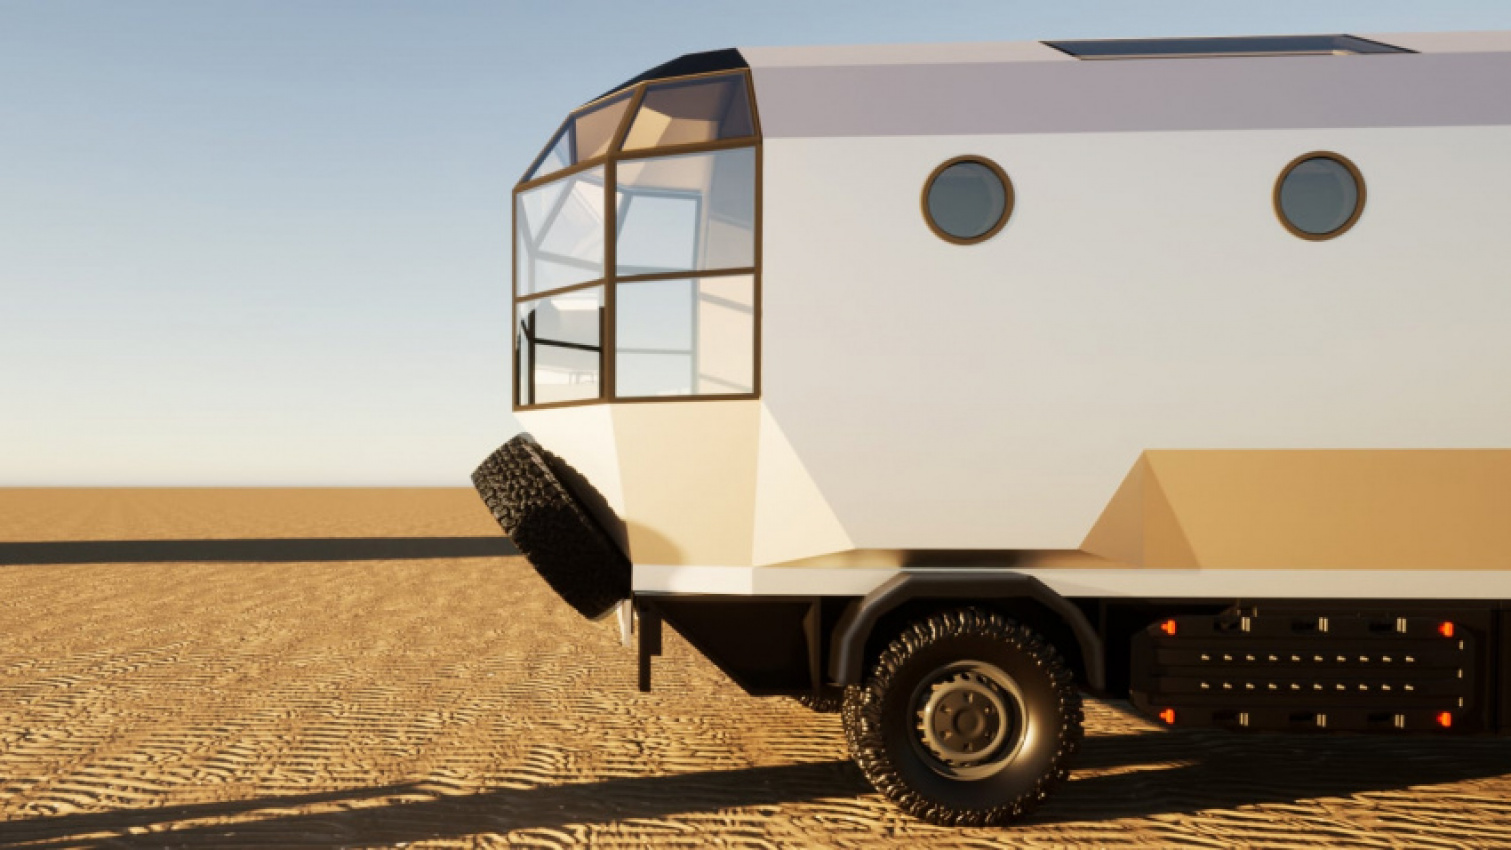 autos, cars, vehicle-genres, the texino atrium camper van prototype is a next-level fish bowl